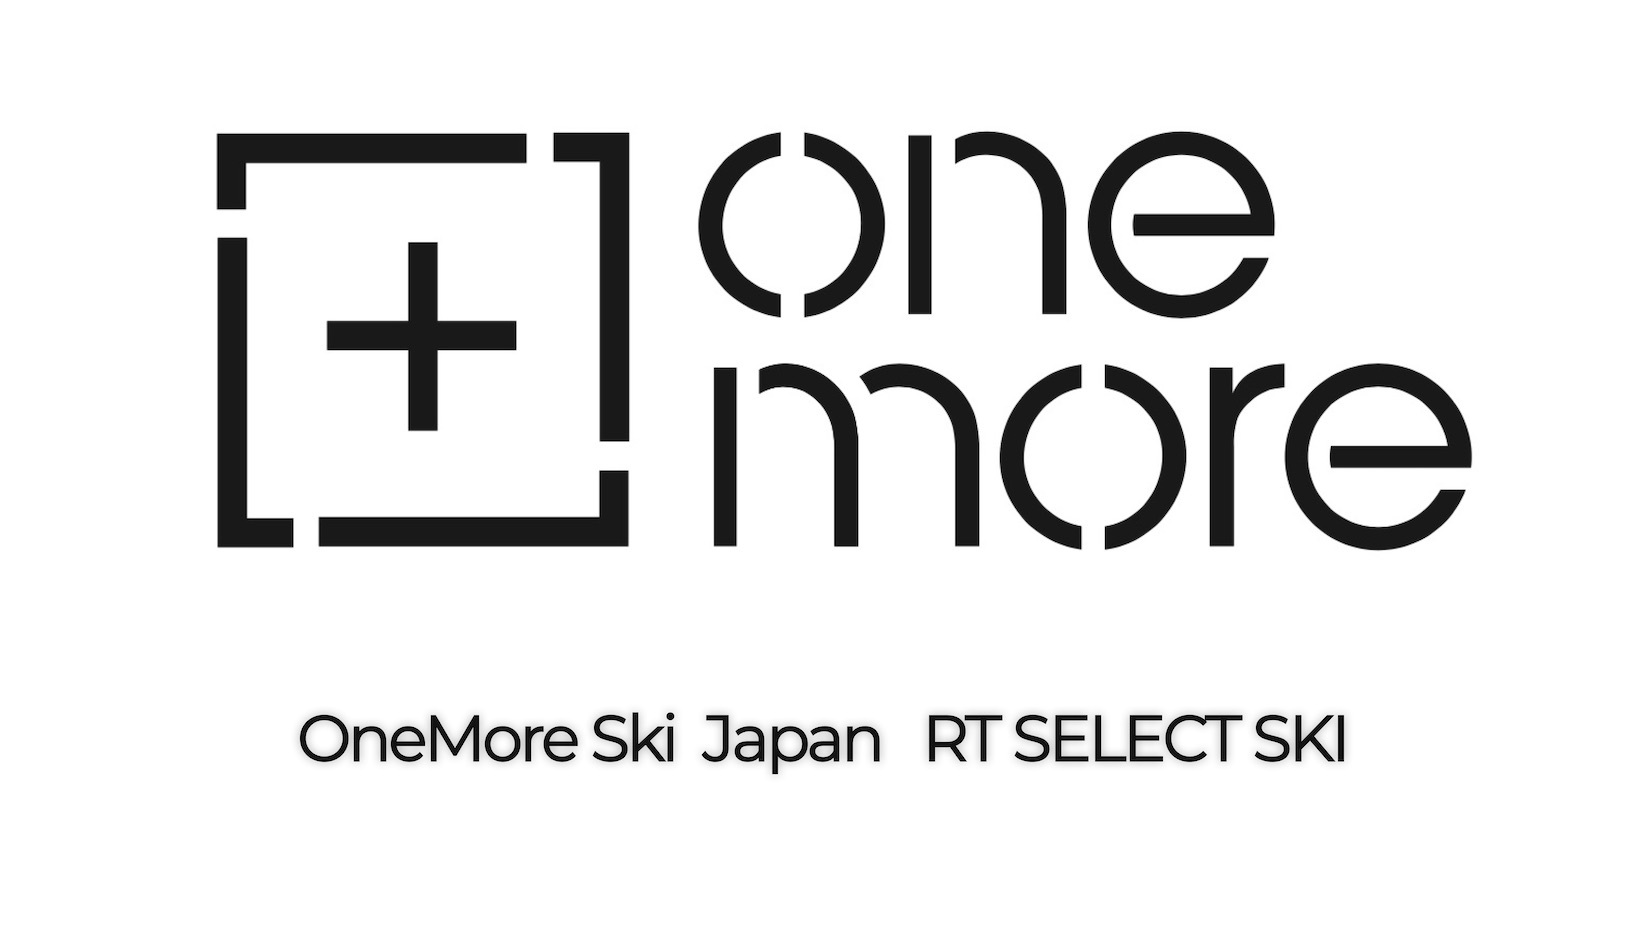 OneMoreSki Japan / RT SELECT SKI